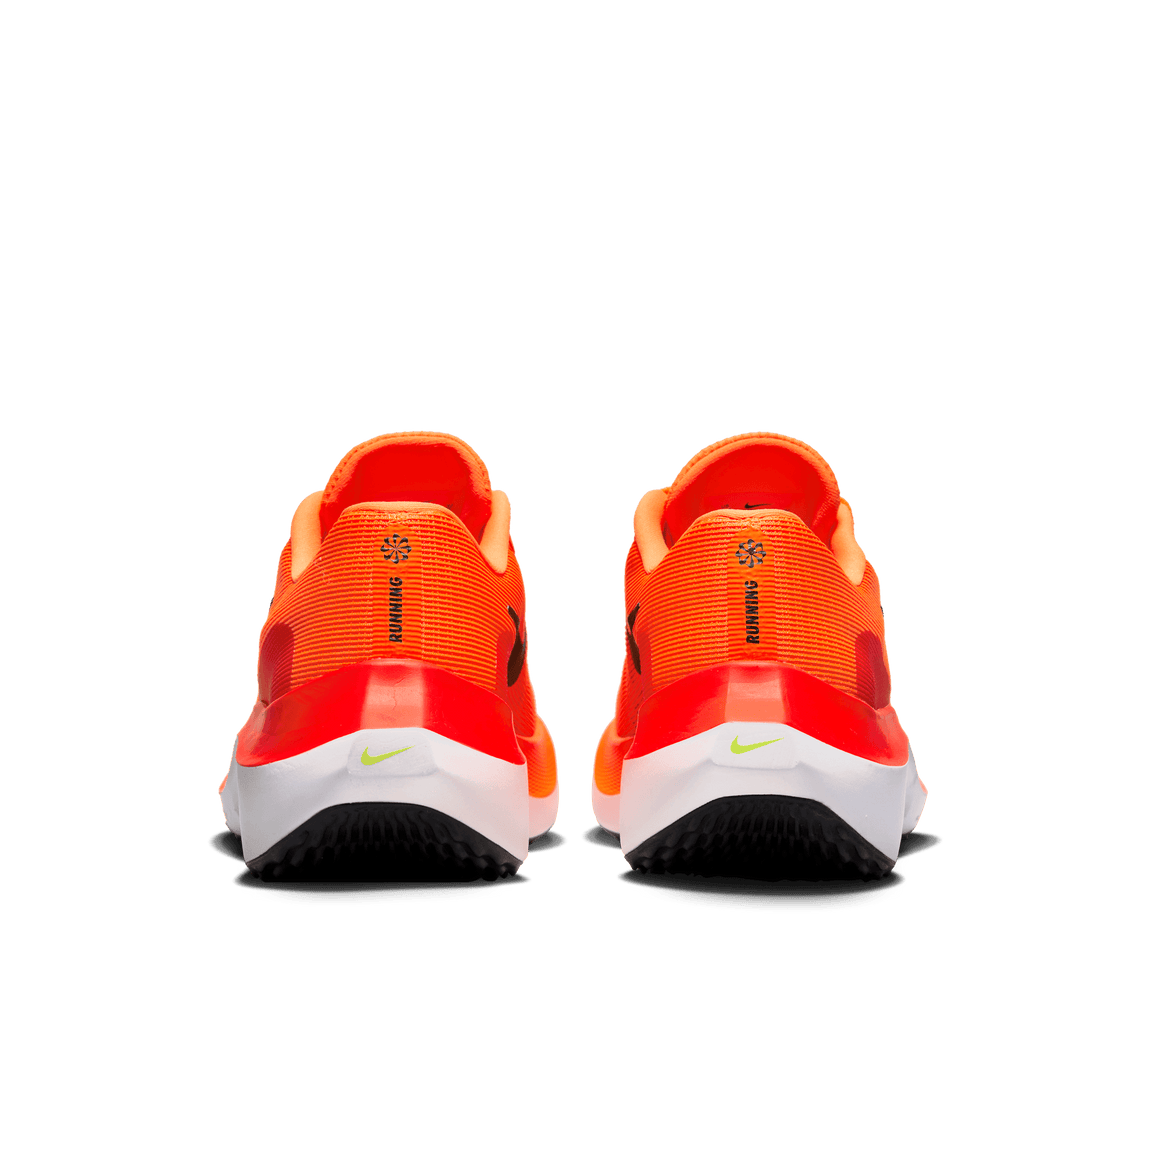 Nike Zoom Fly 5 (Total Orange/Black/Bright Crimson-White) - Nike Zoom Fly 5 (Total Orange/Black/Bright Crimson-White) - 